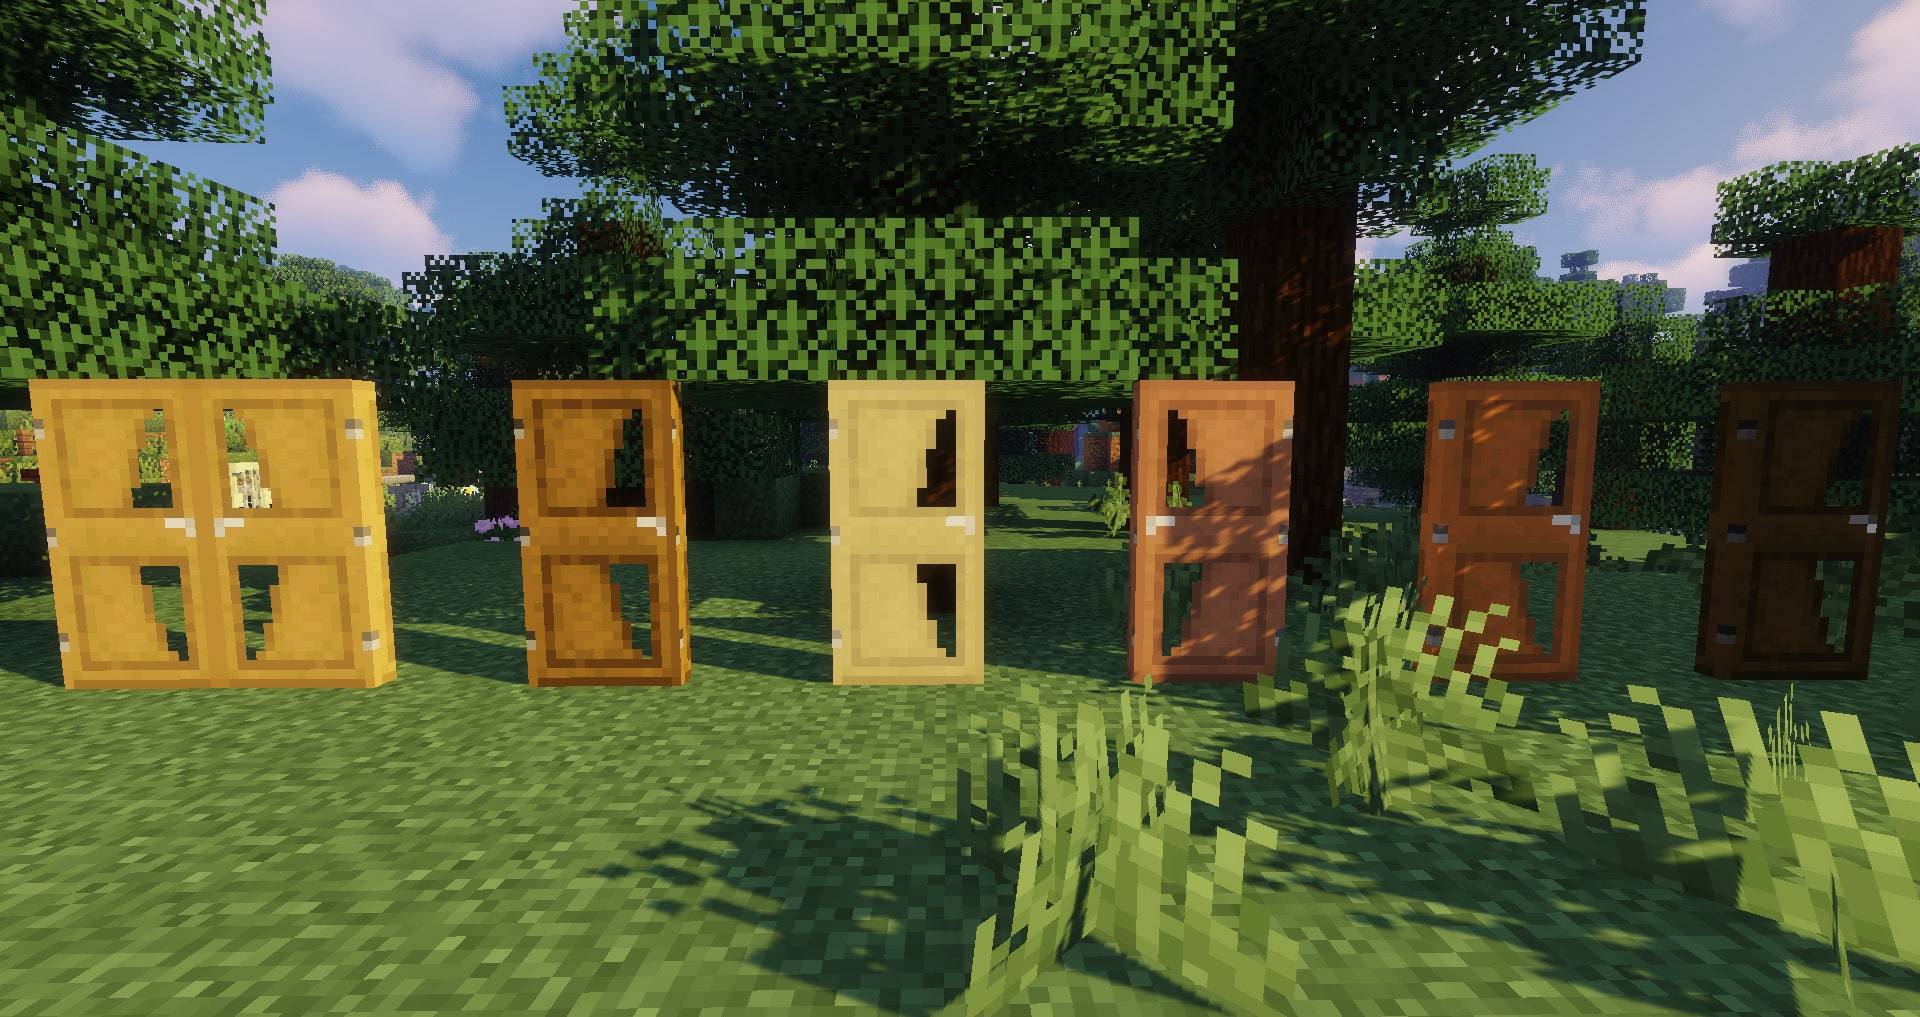 Macaw_s Doors mod for minecraft 24